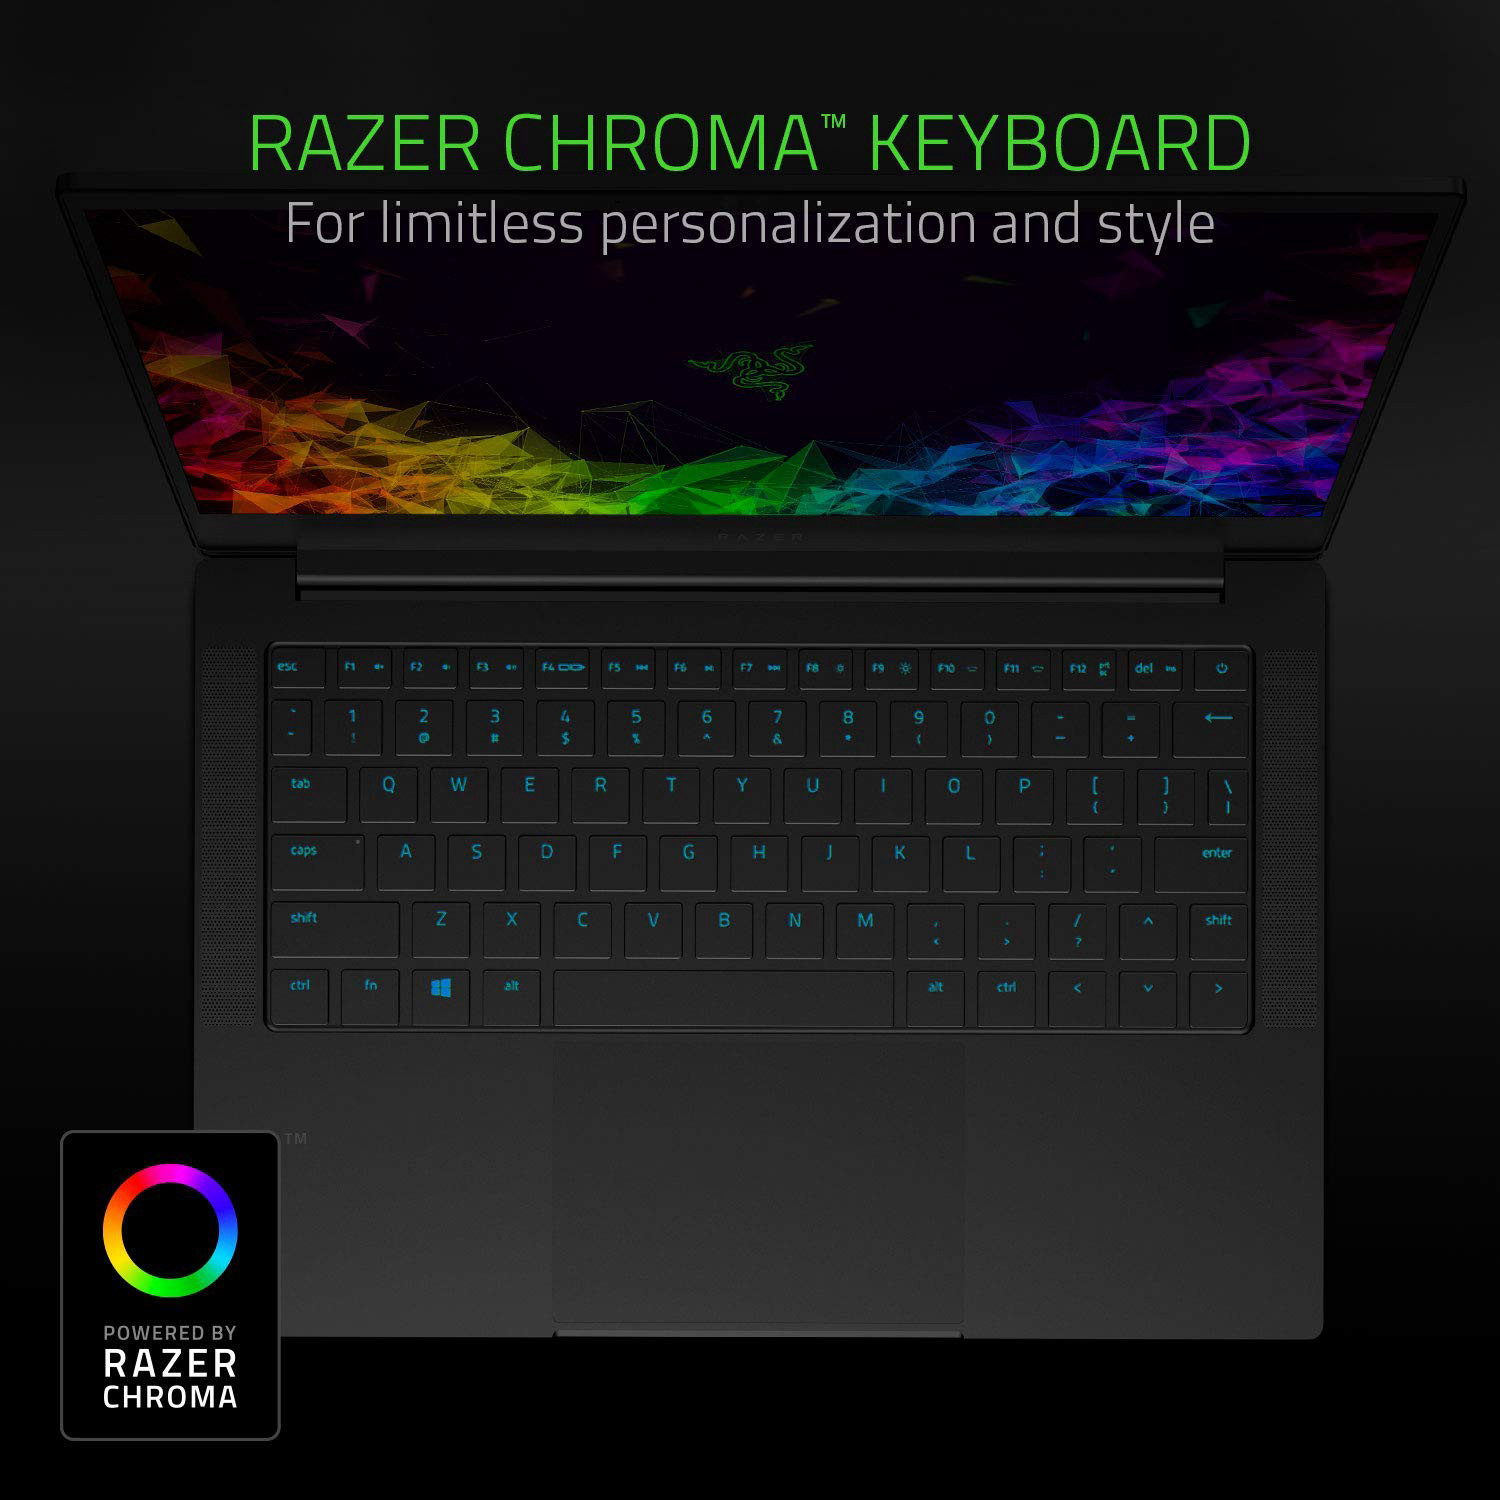 Razer Blade Stealth 13 Ultrabook Laptop: Intel Core i7-8565U 4-Core, GeForce MX150, 13.3" FHD 1080p, 16GB RAM, 256GB SSD - CNC Aluminum - Chroma RGB Lighting - Thunderbolt 3 Compatible